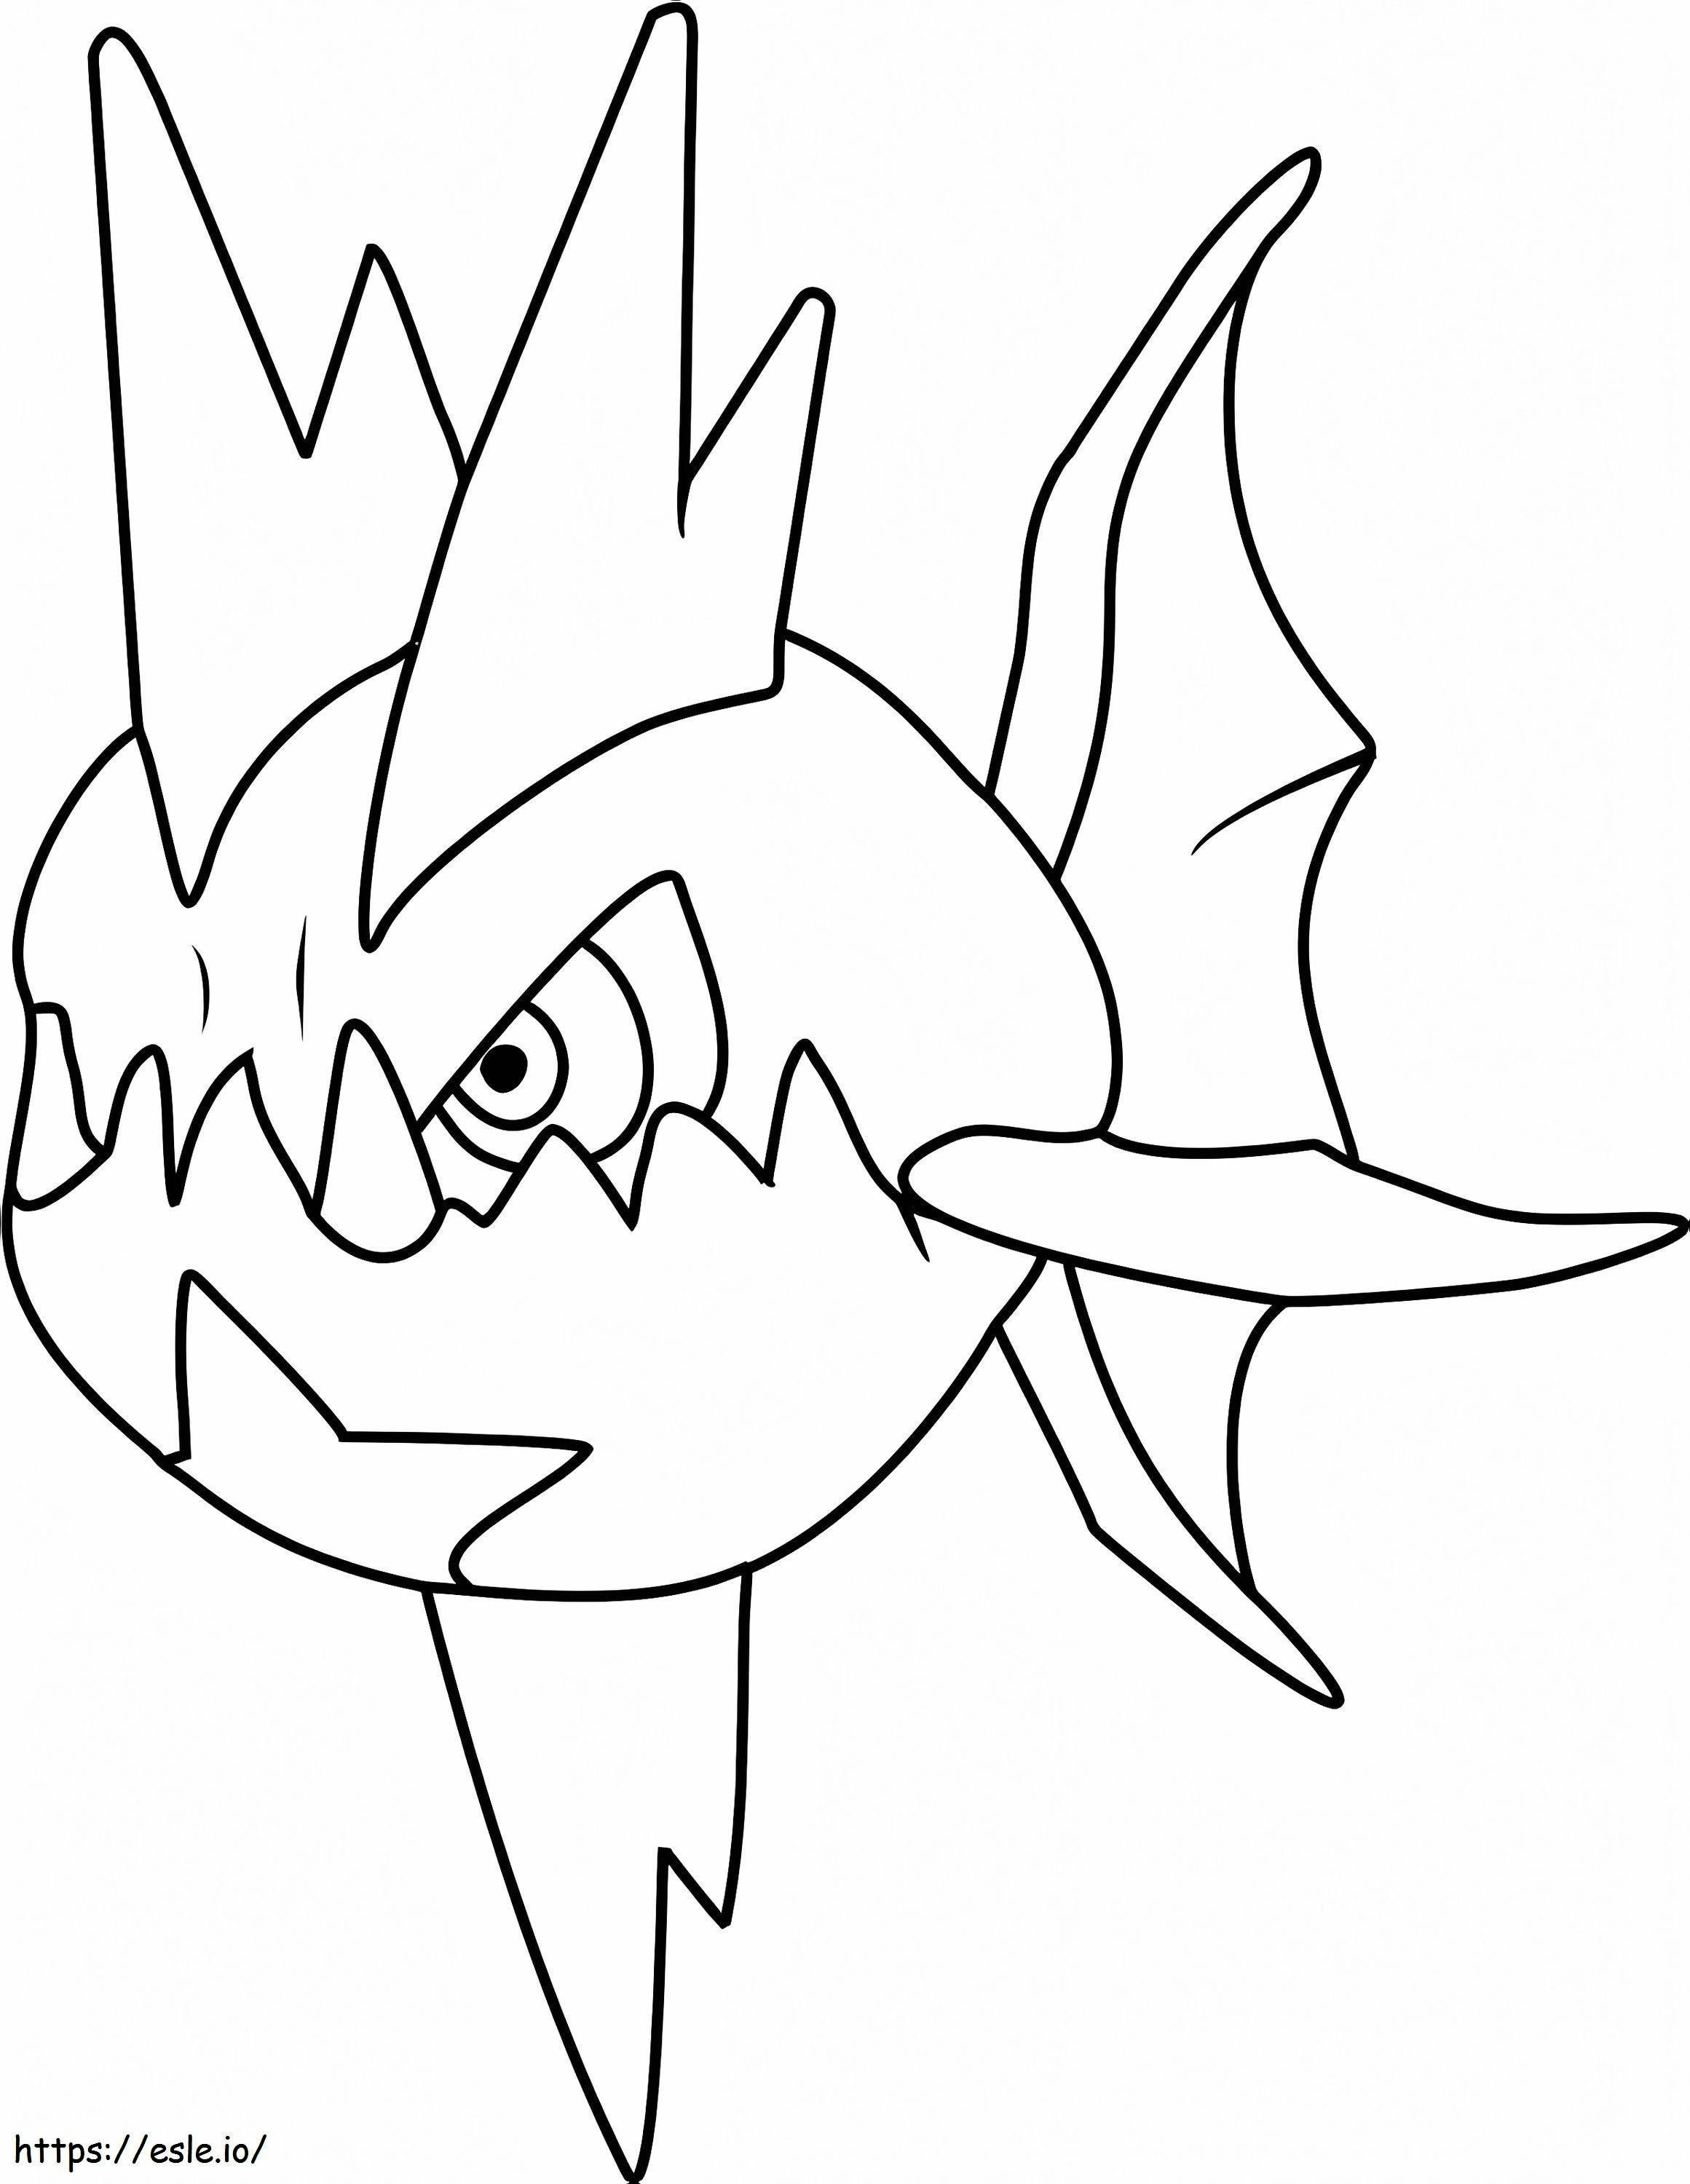 Coloriage Pokémon Carvanha Gen 3 à imprimer dessin